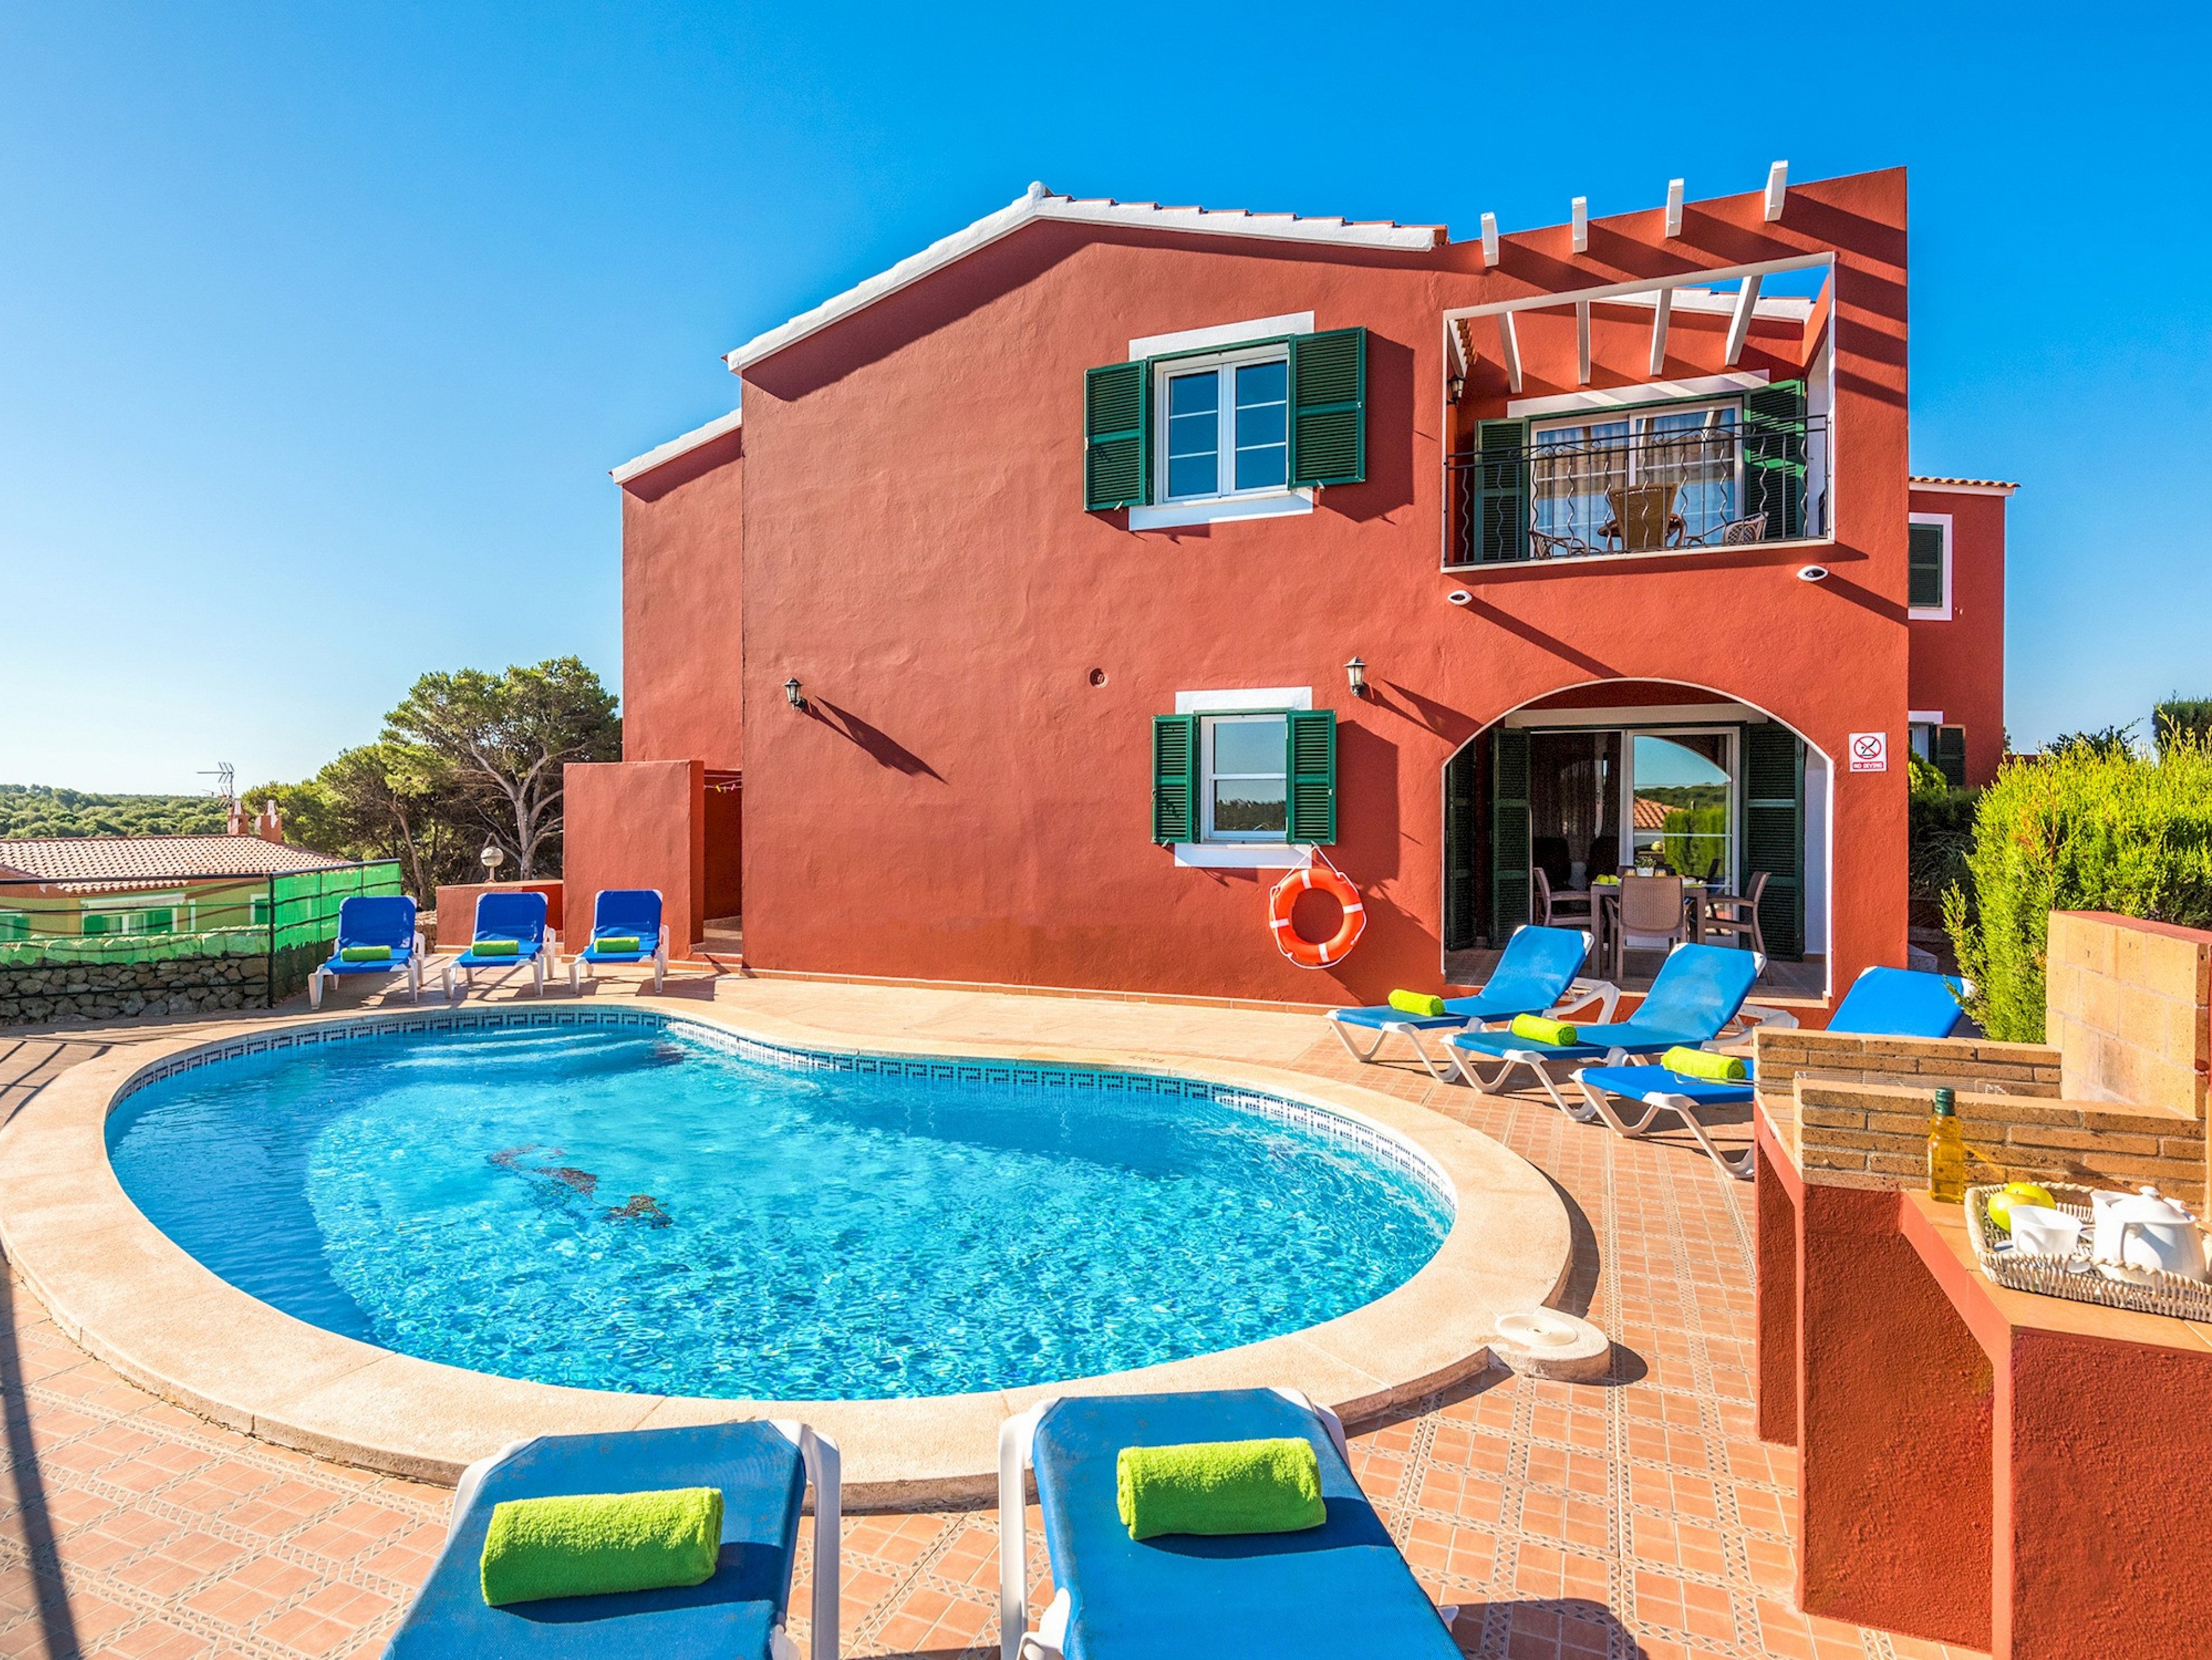 Villa Clara Villas in Menorca with a private pool